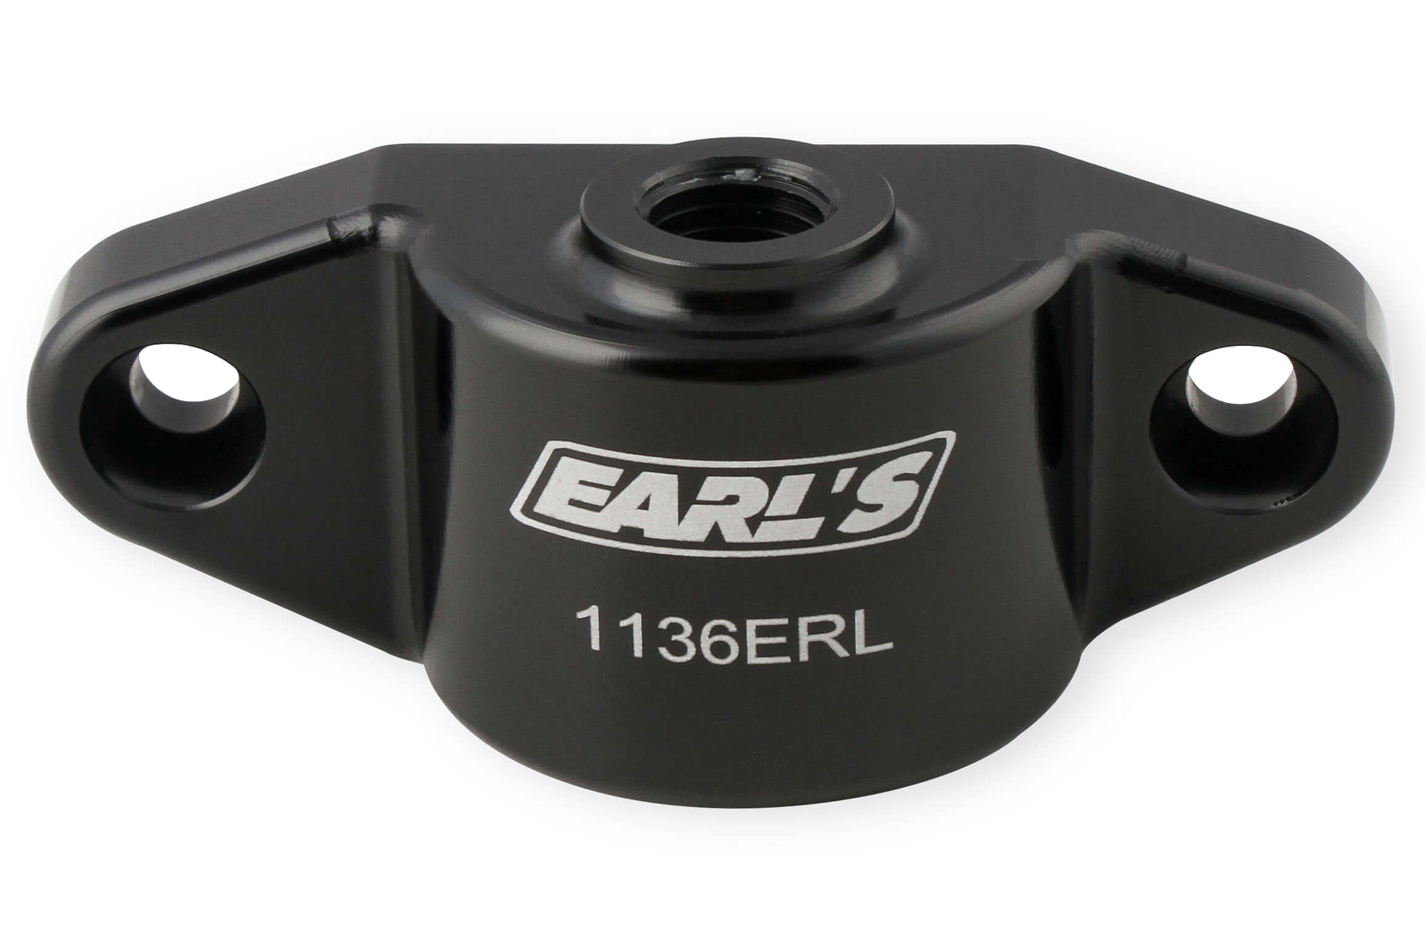 Earls 1136ERL Oil Filter Adapter, Blockoff, Bolt-On, 1/8 in NPT Female Inlet, Aluminum, Black Anodized, GM GenV LT-Series, Kit